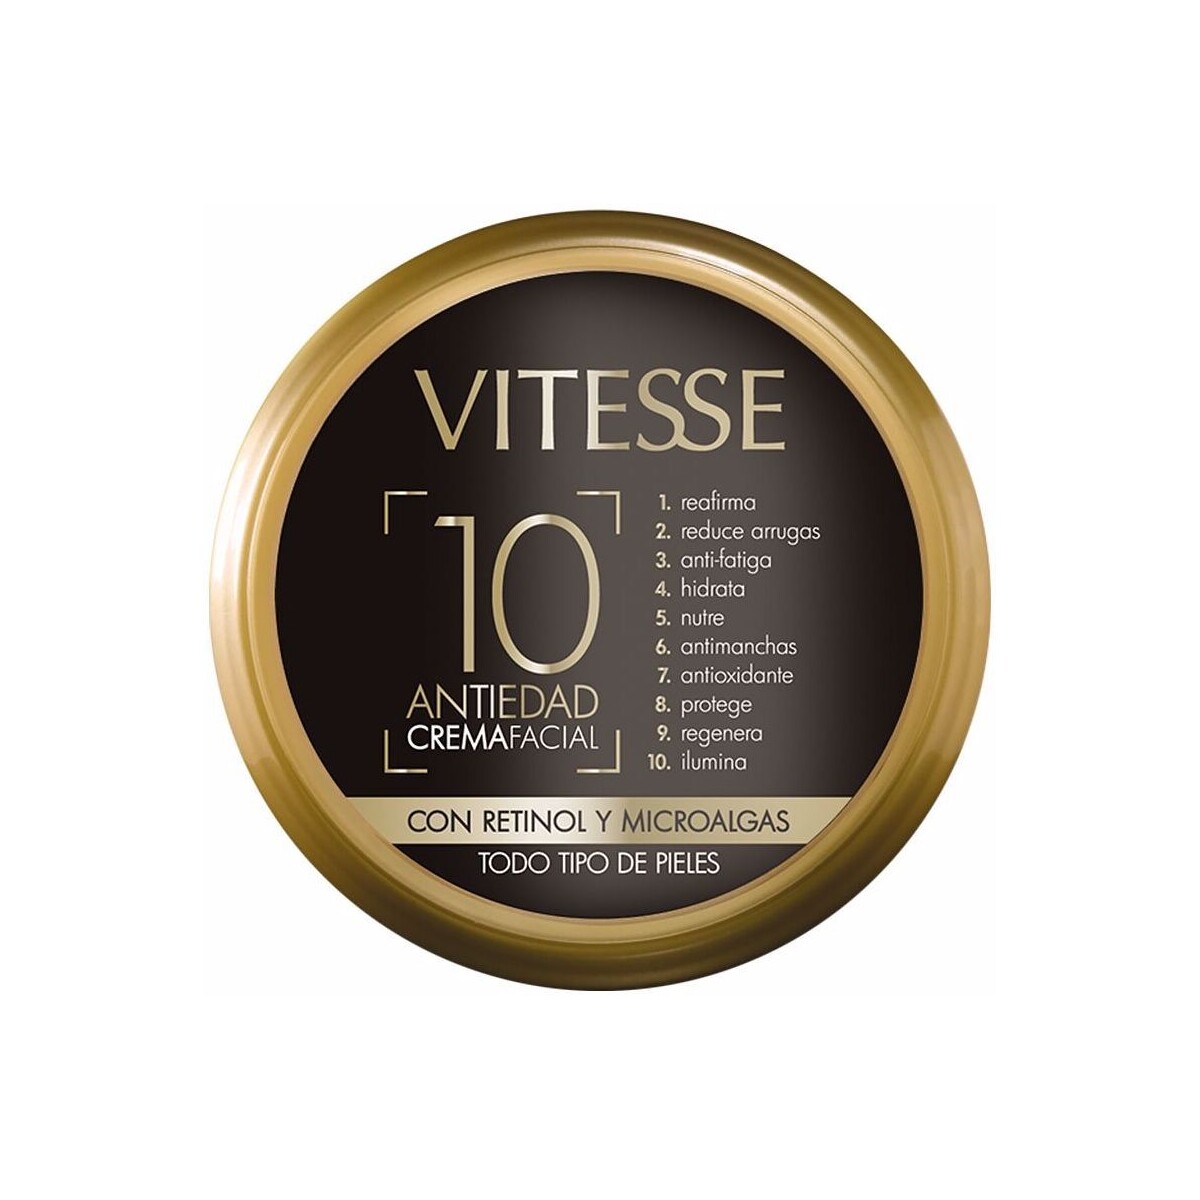 Beauty Anti-Aging & Anti-Falten Produkte Vitesse Antiedad 10 Crema Facial 